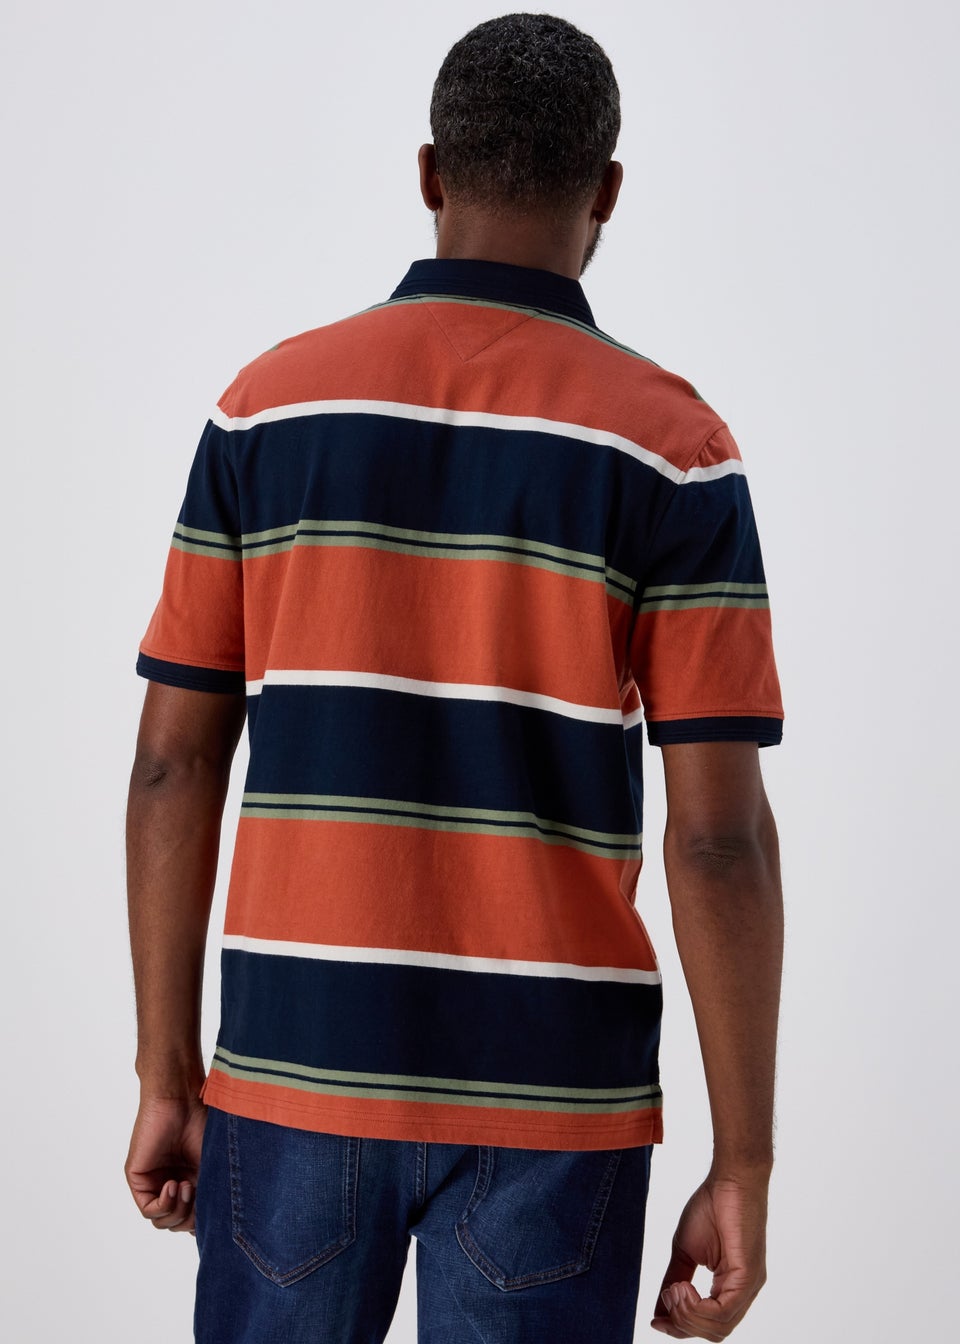 Lincoln Orange Stripe Polo Shirt